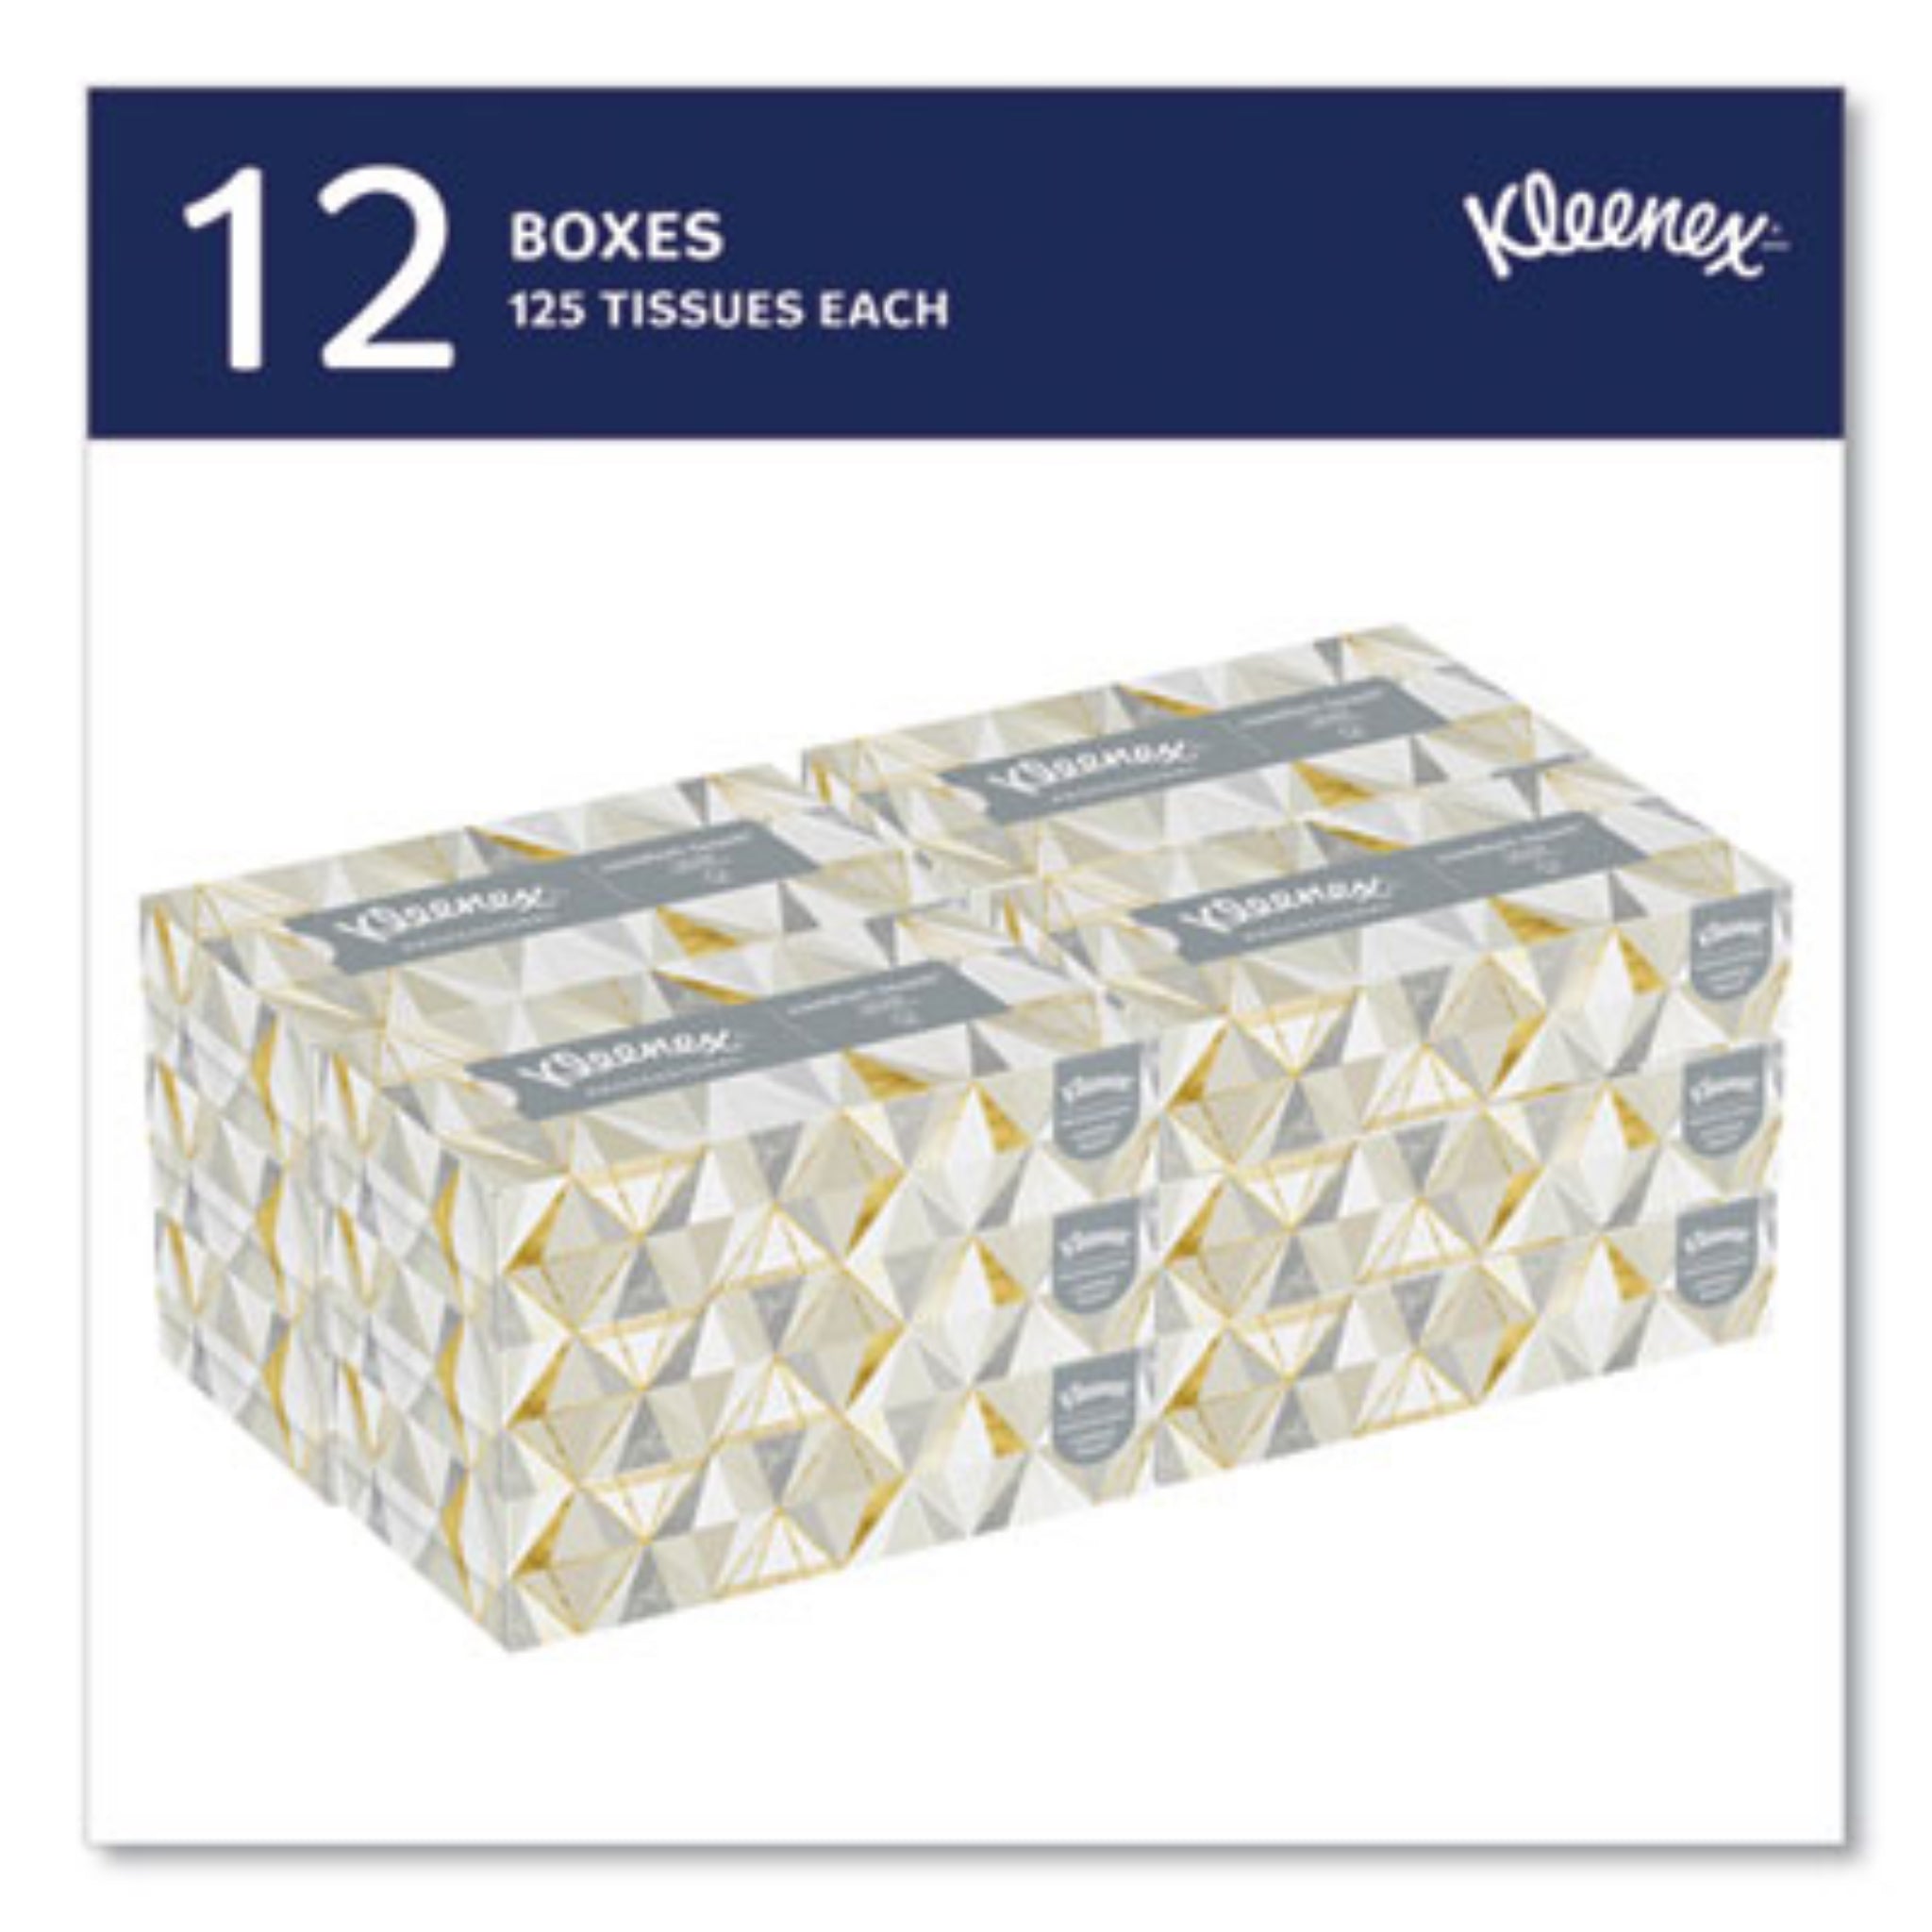 KIMBERLY-CLARK Kleenex 03076 White Facial Tissue for Business, 12 Boxes